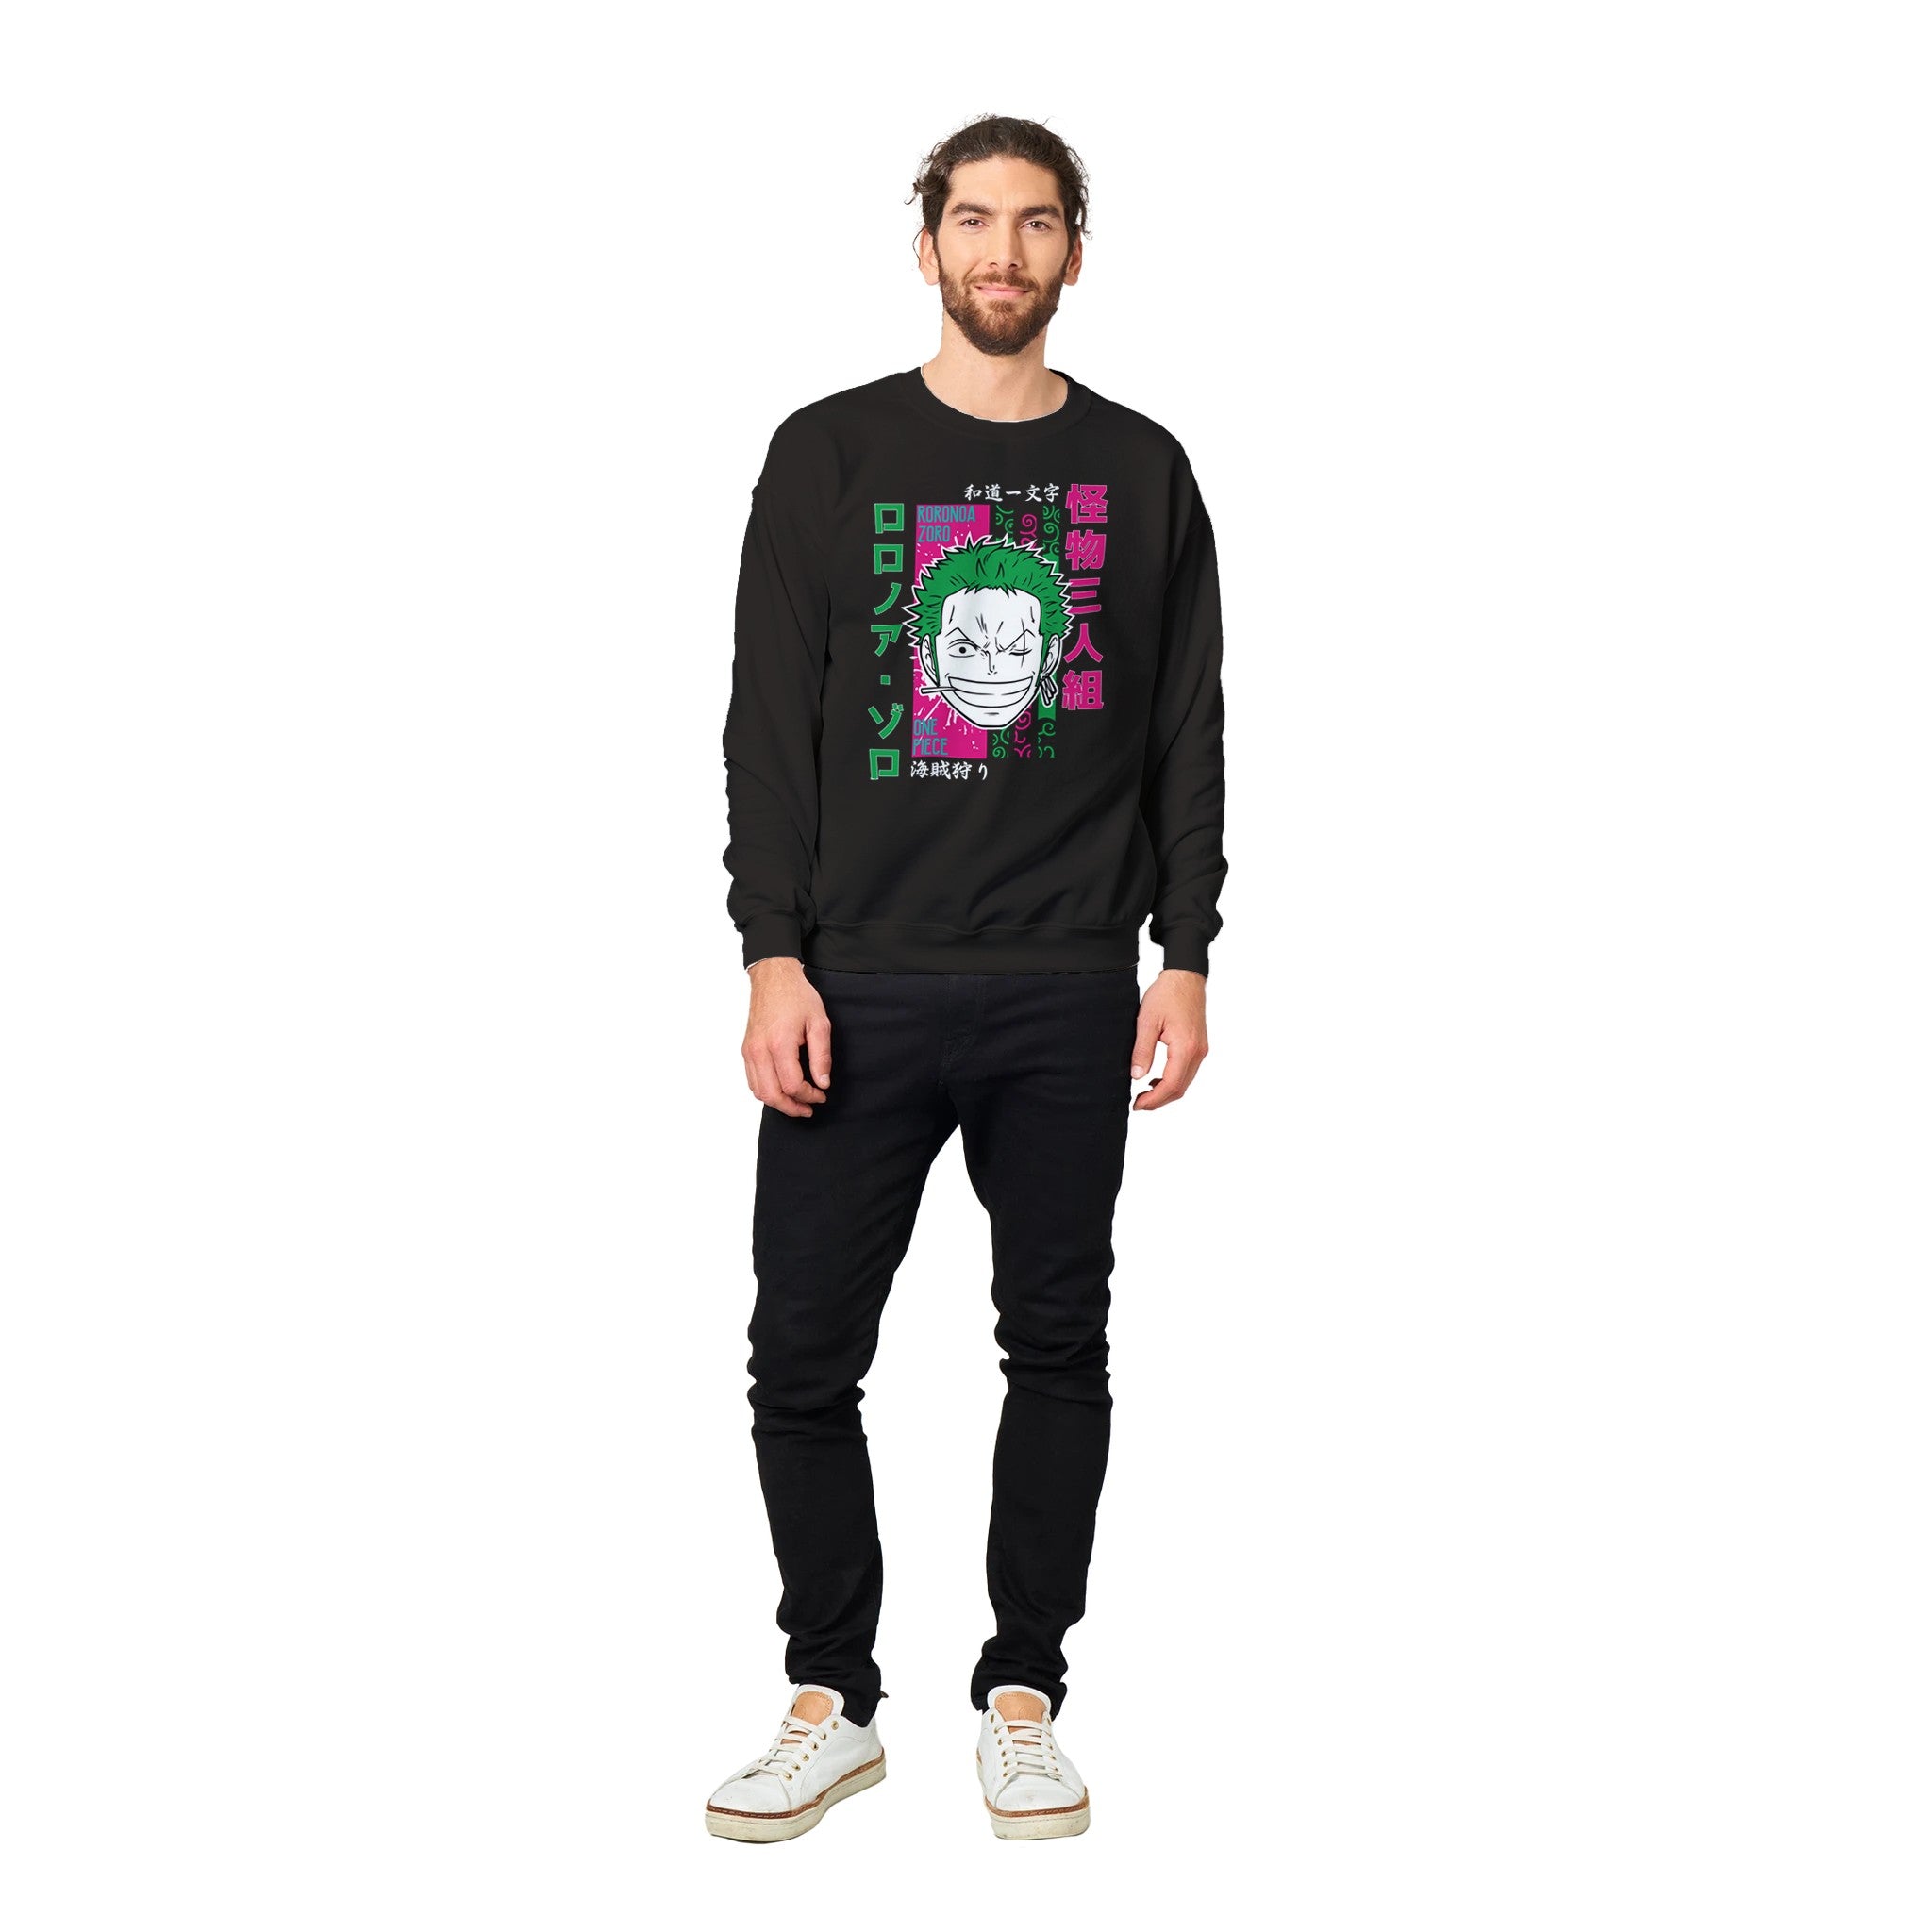 shop and buy one piece anime clothing zoro sweatshirt/jumper/longsleeve